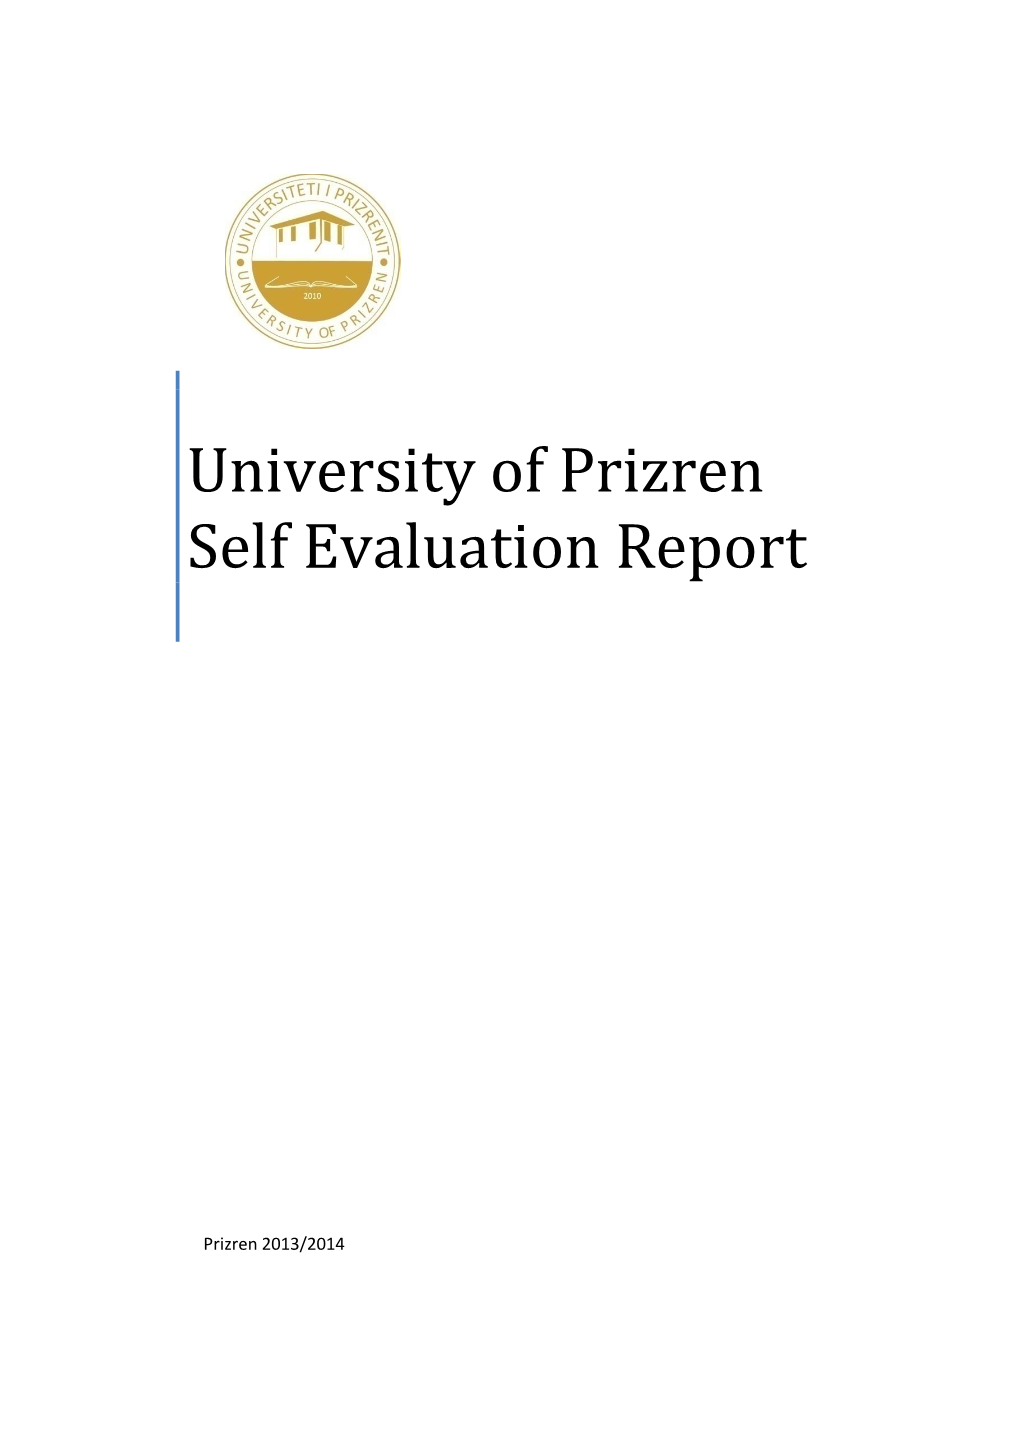 University of Prizren Self Evaluation Report